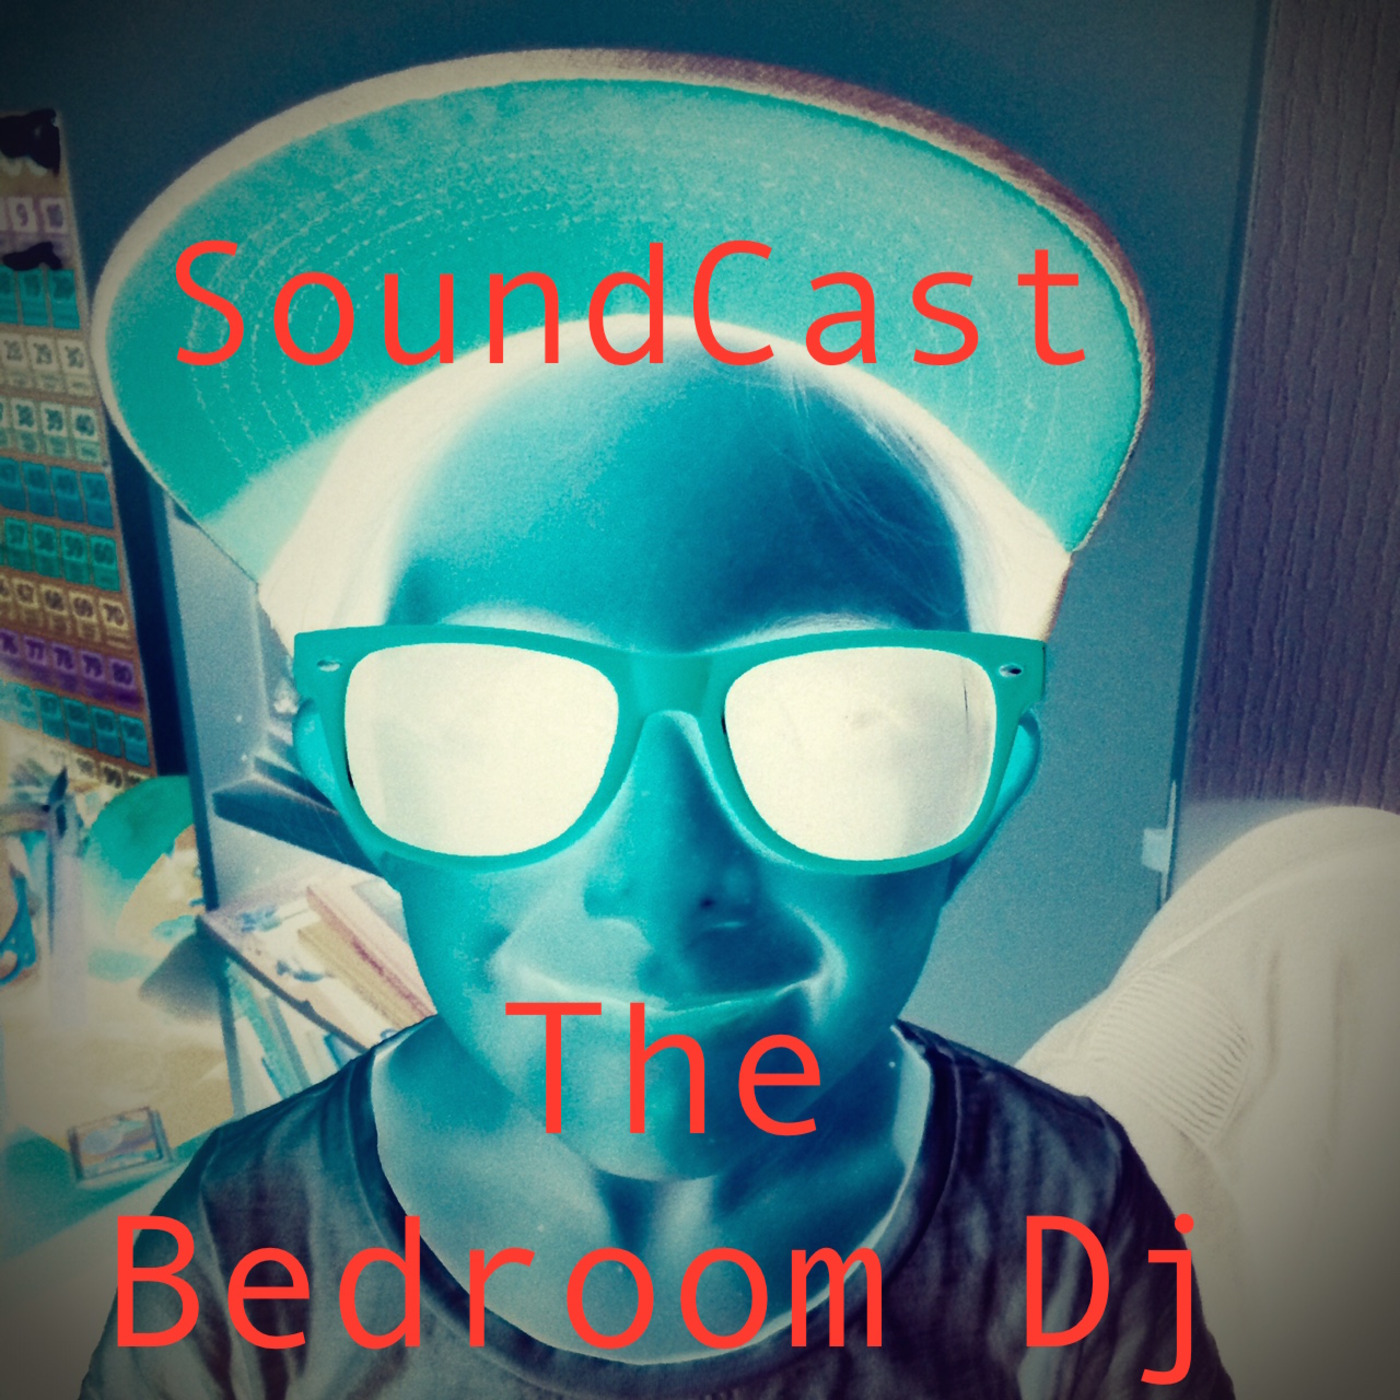 The Bedroom Dj SoundCast